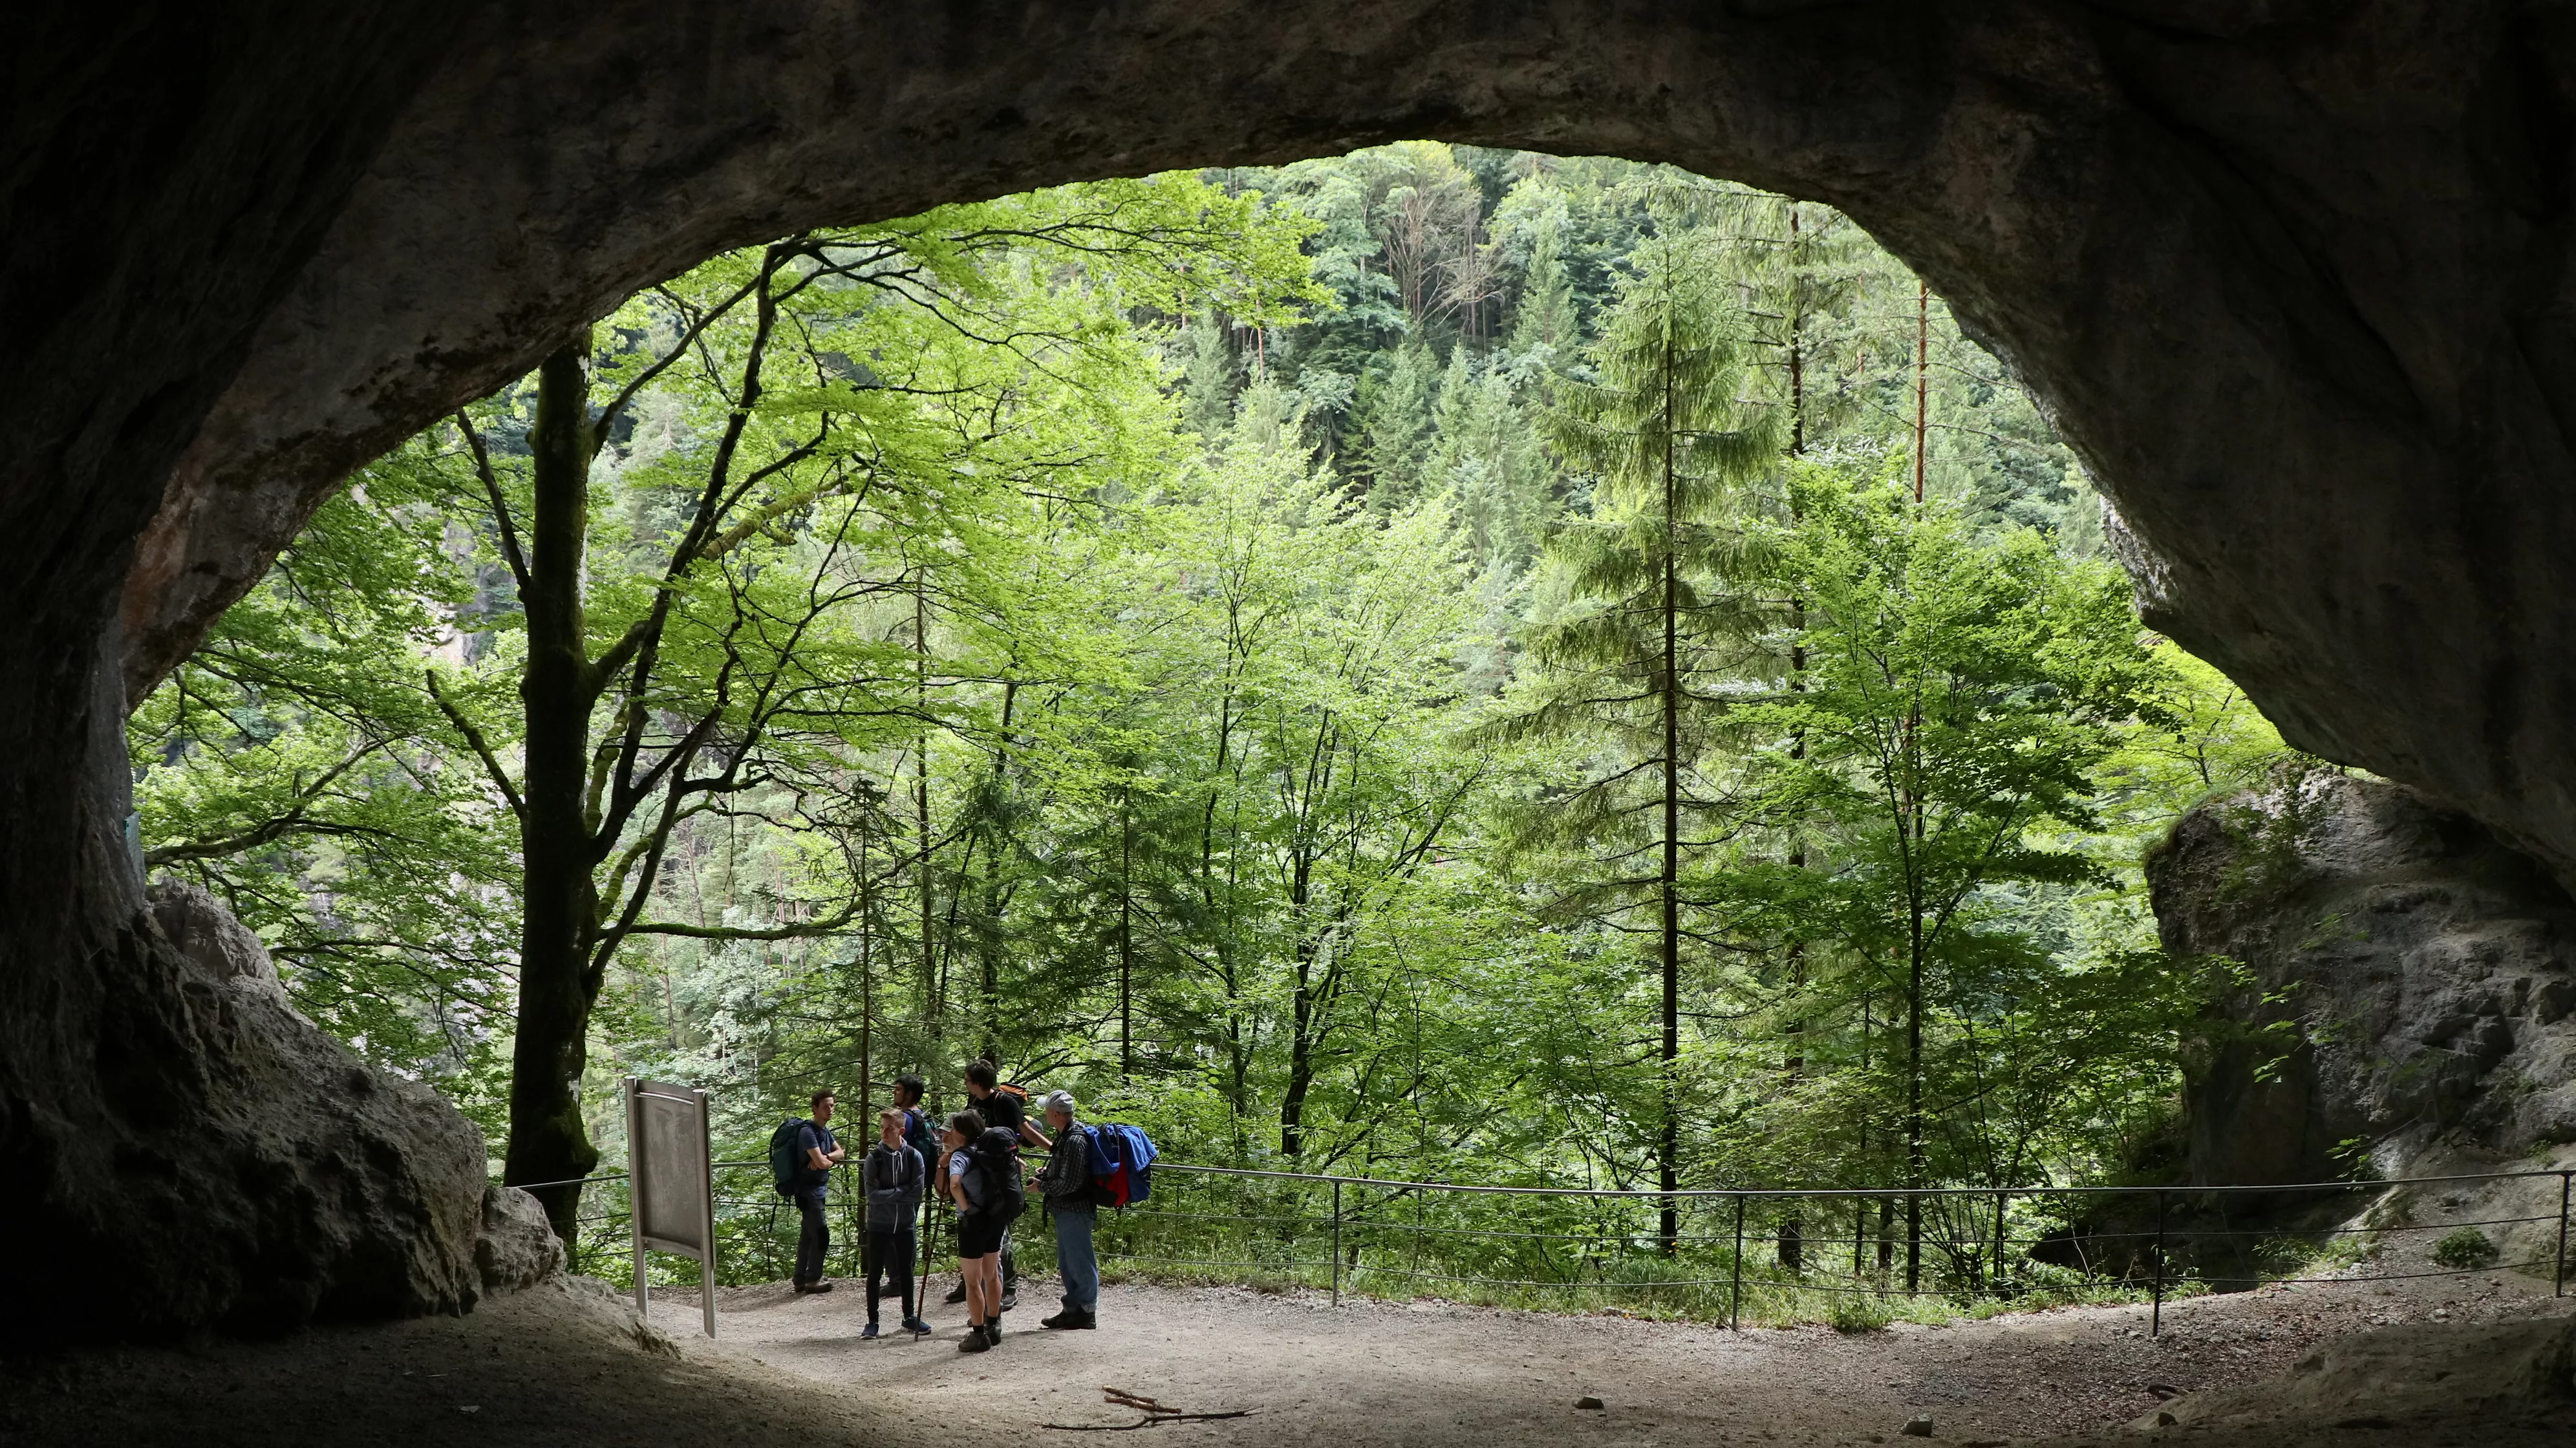 Tischofer Cave in Austria, Europe | Caves & Underground Places - Rated 0.8